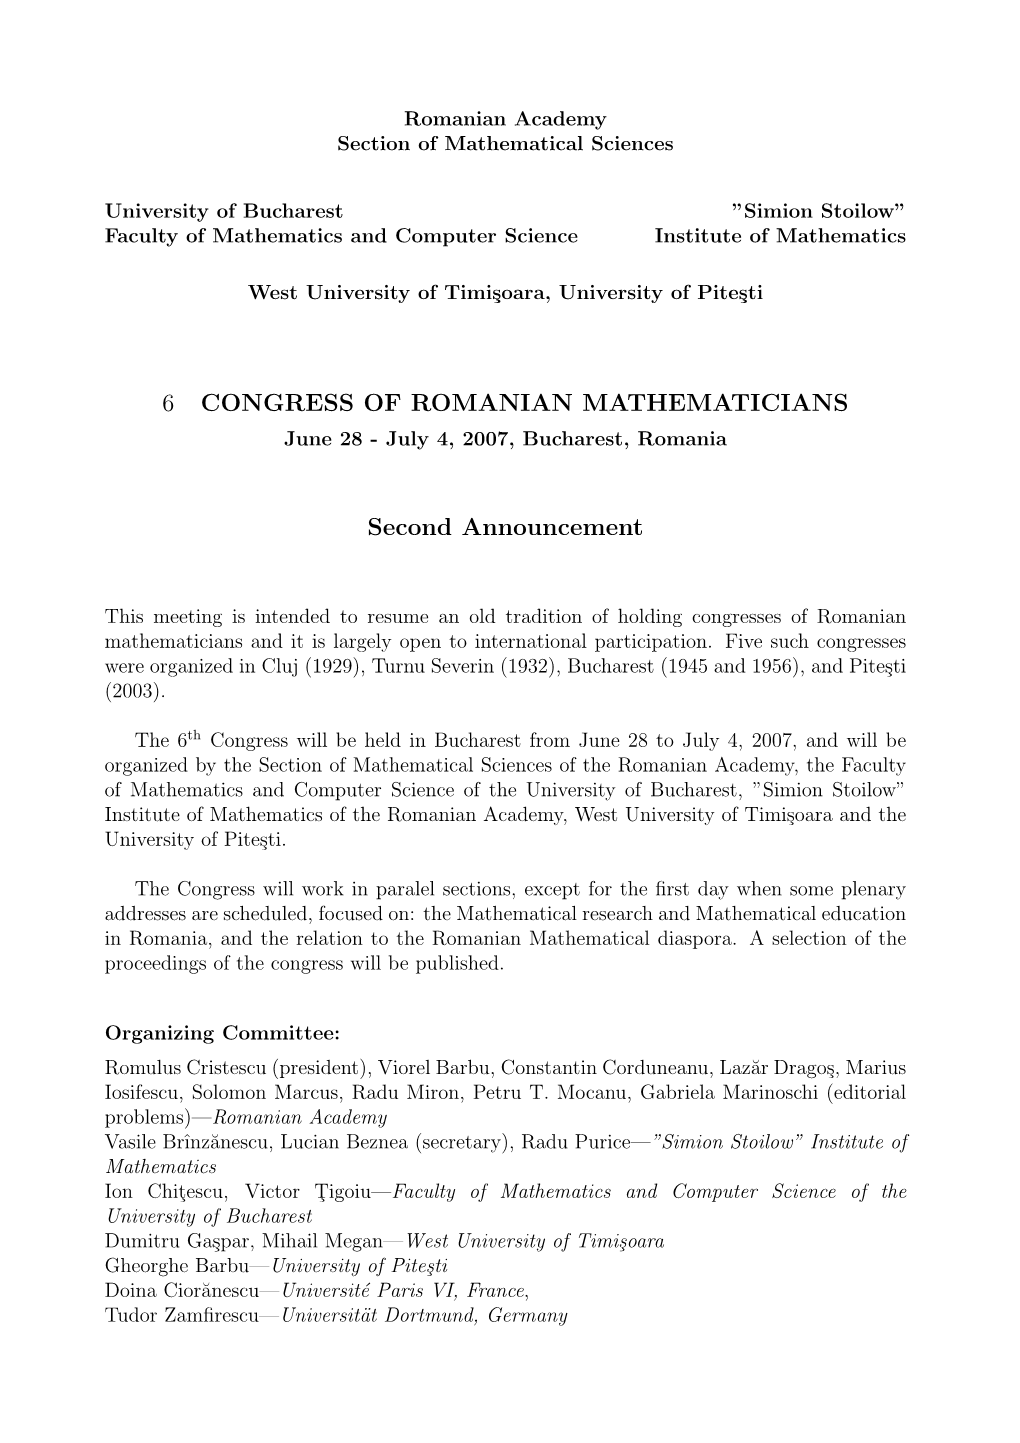 6Th CONGRESS of ROMANIAN MATHEMATICIANS Second Announcement